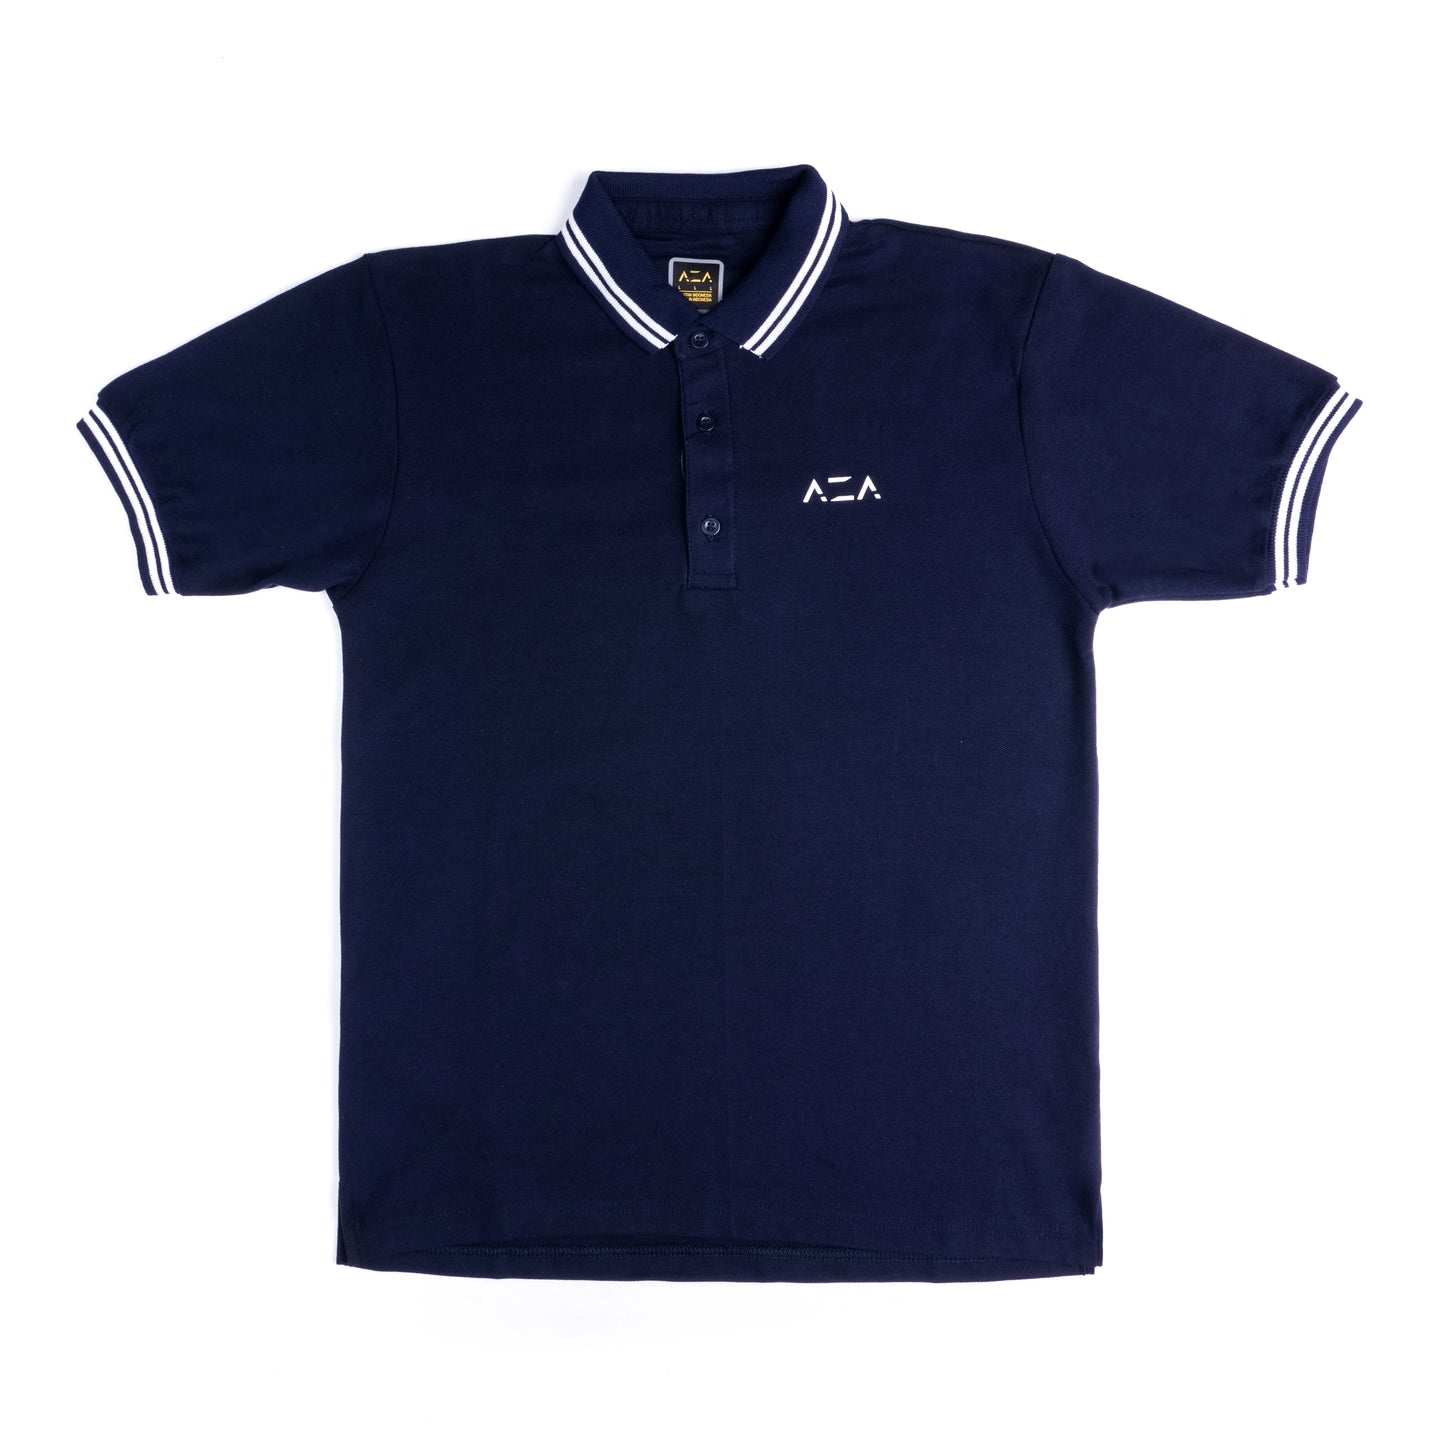 AZA Basic Polo Shirt - Navy